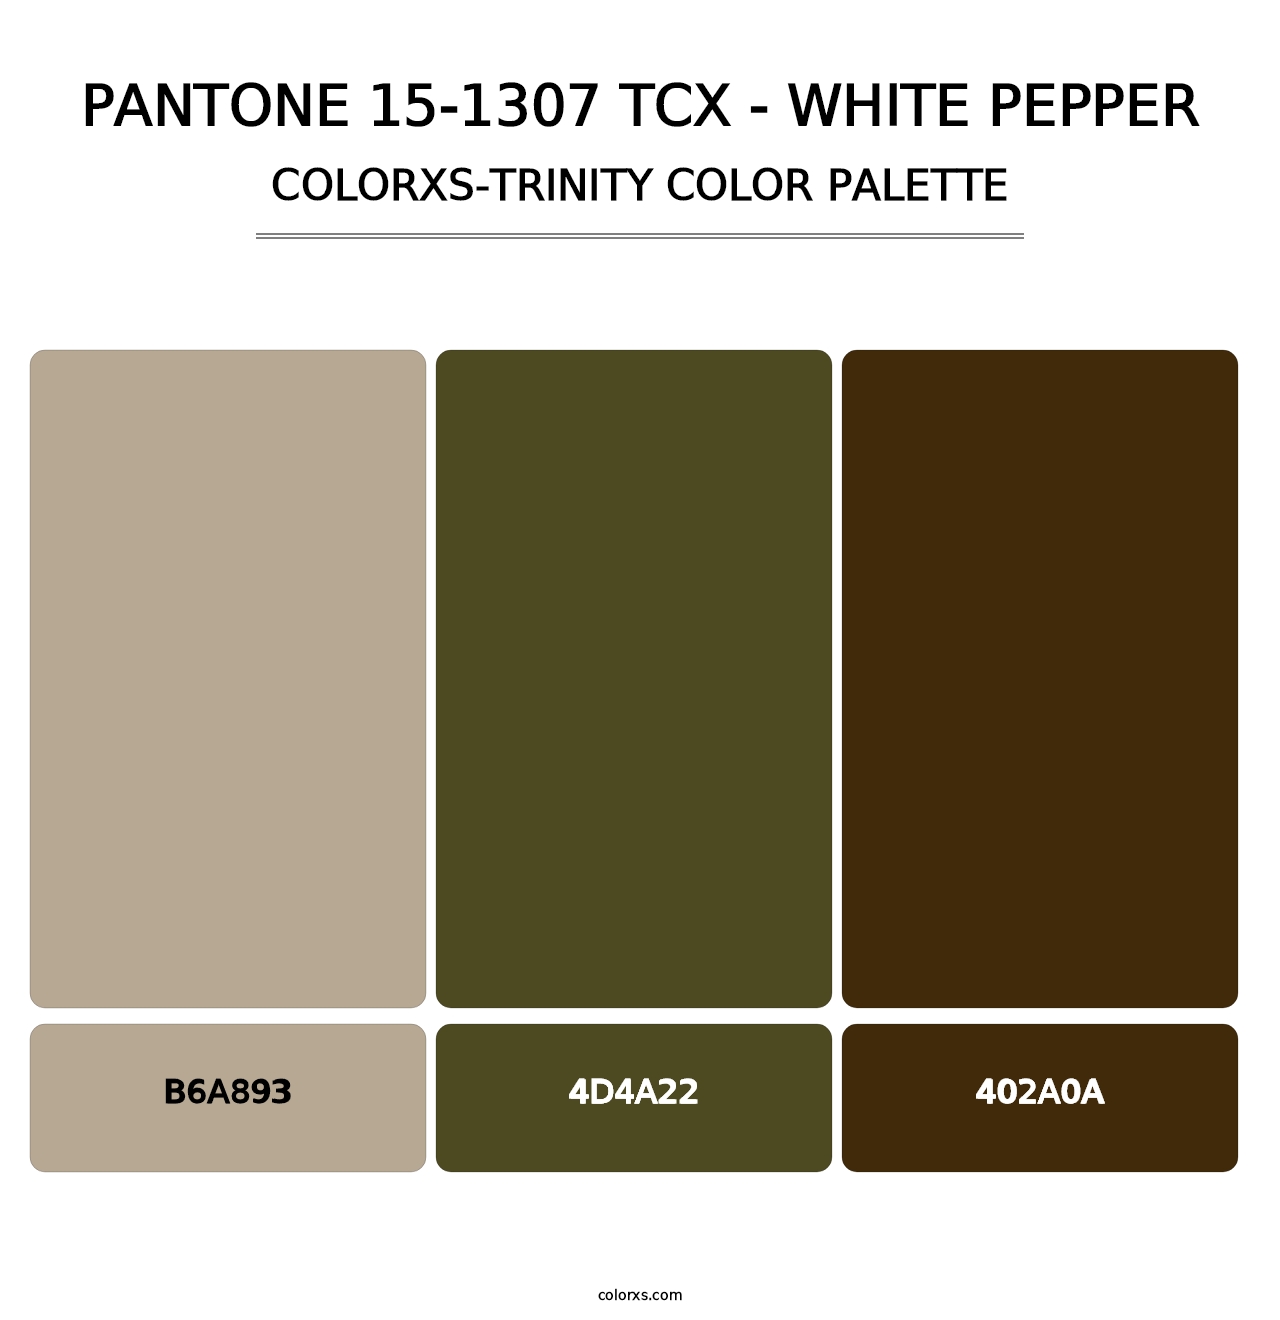 PANTONE 15-1307 TCX - White Pepper - Colorxs Trinity Palette